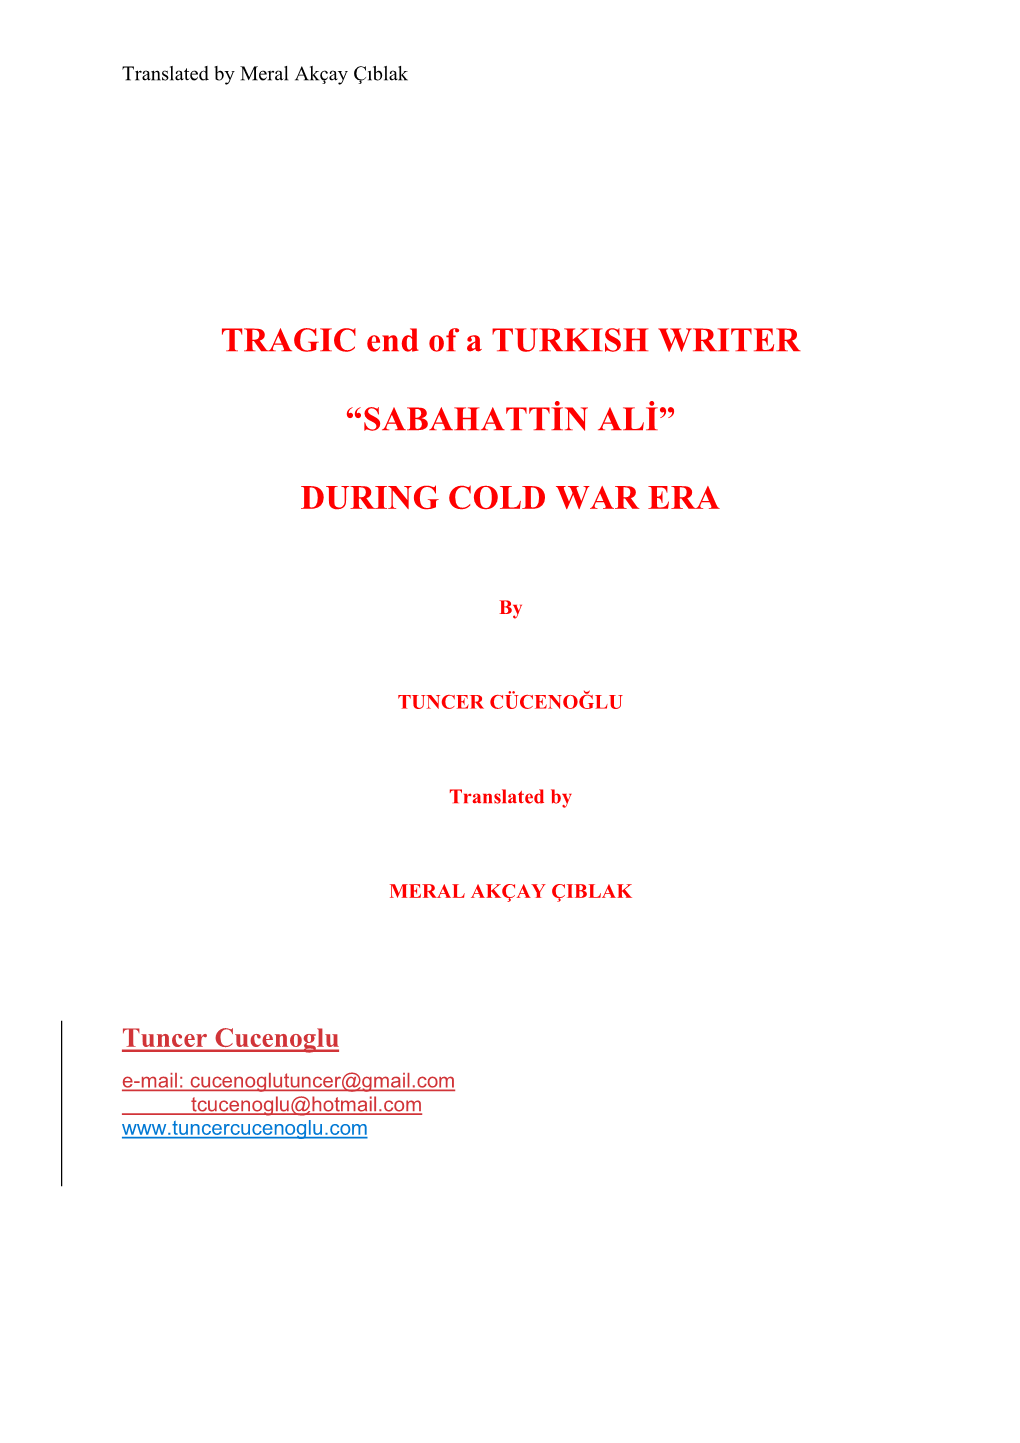 TRAGIC End of a TURKISH WRITER “SABAHATTİN ALİ” DURING COLD